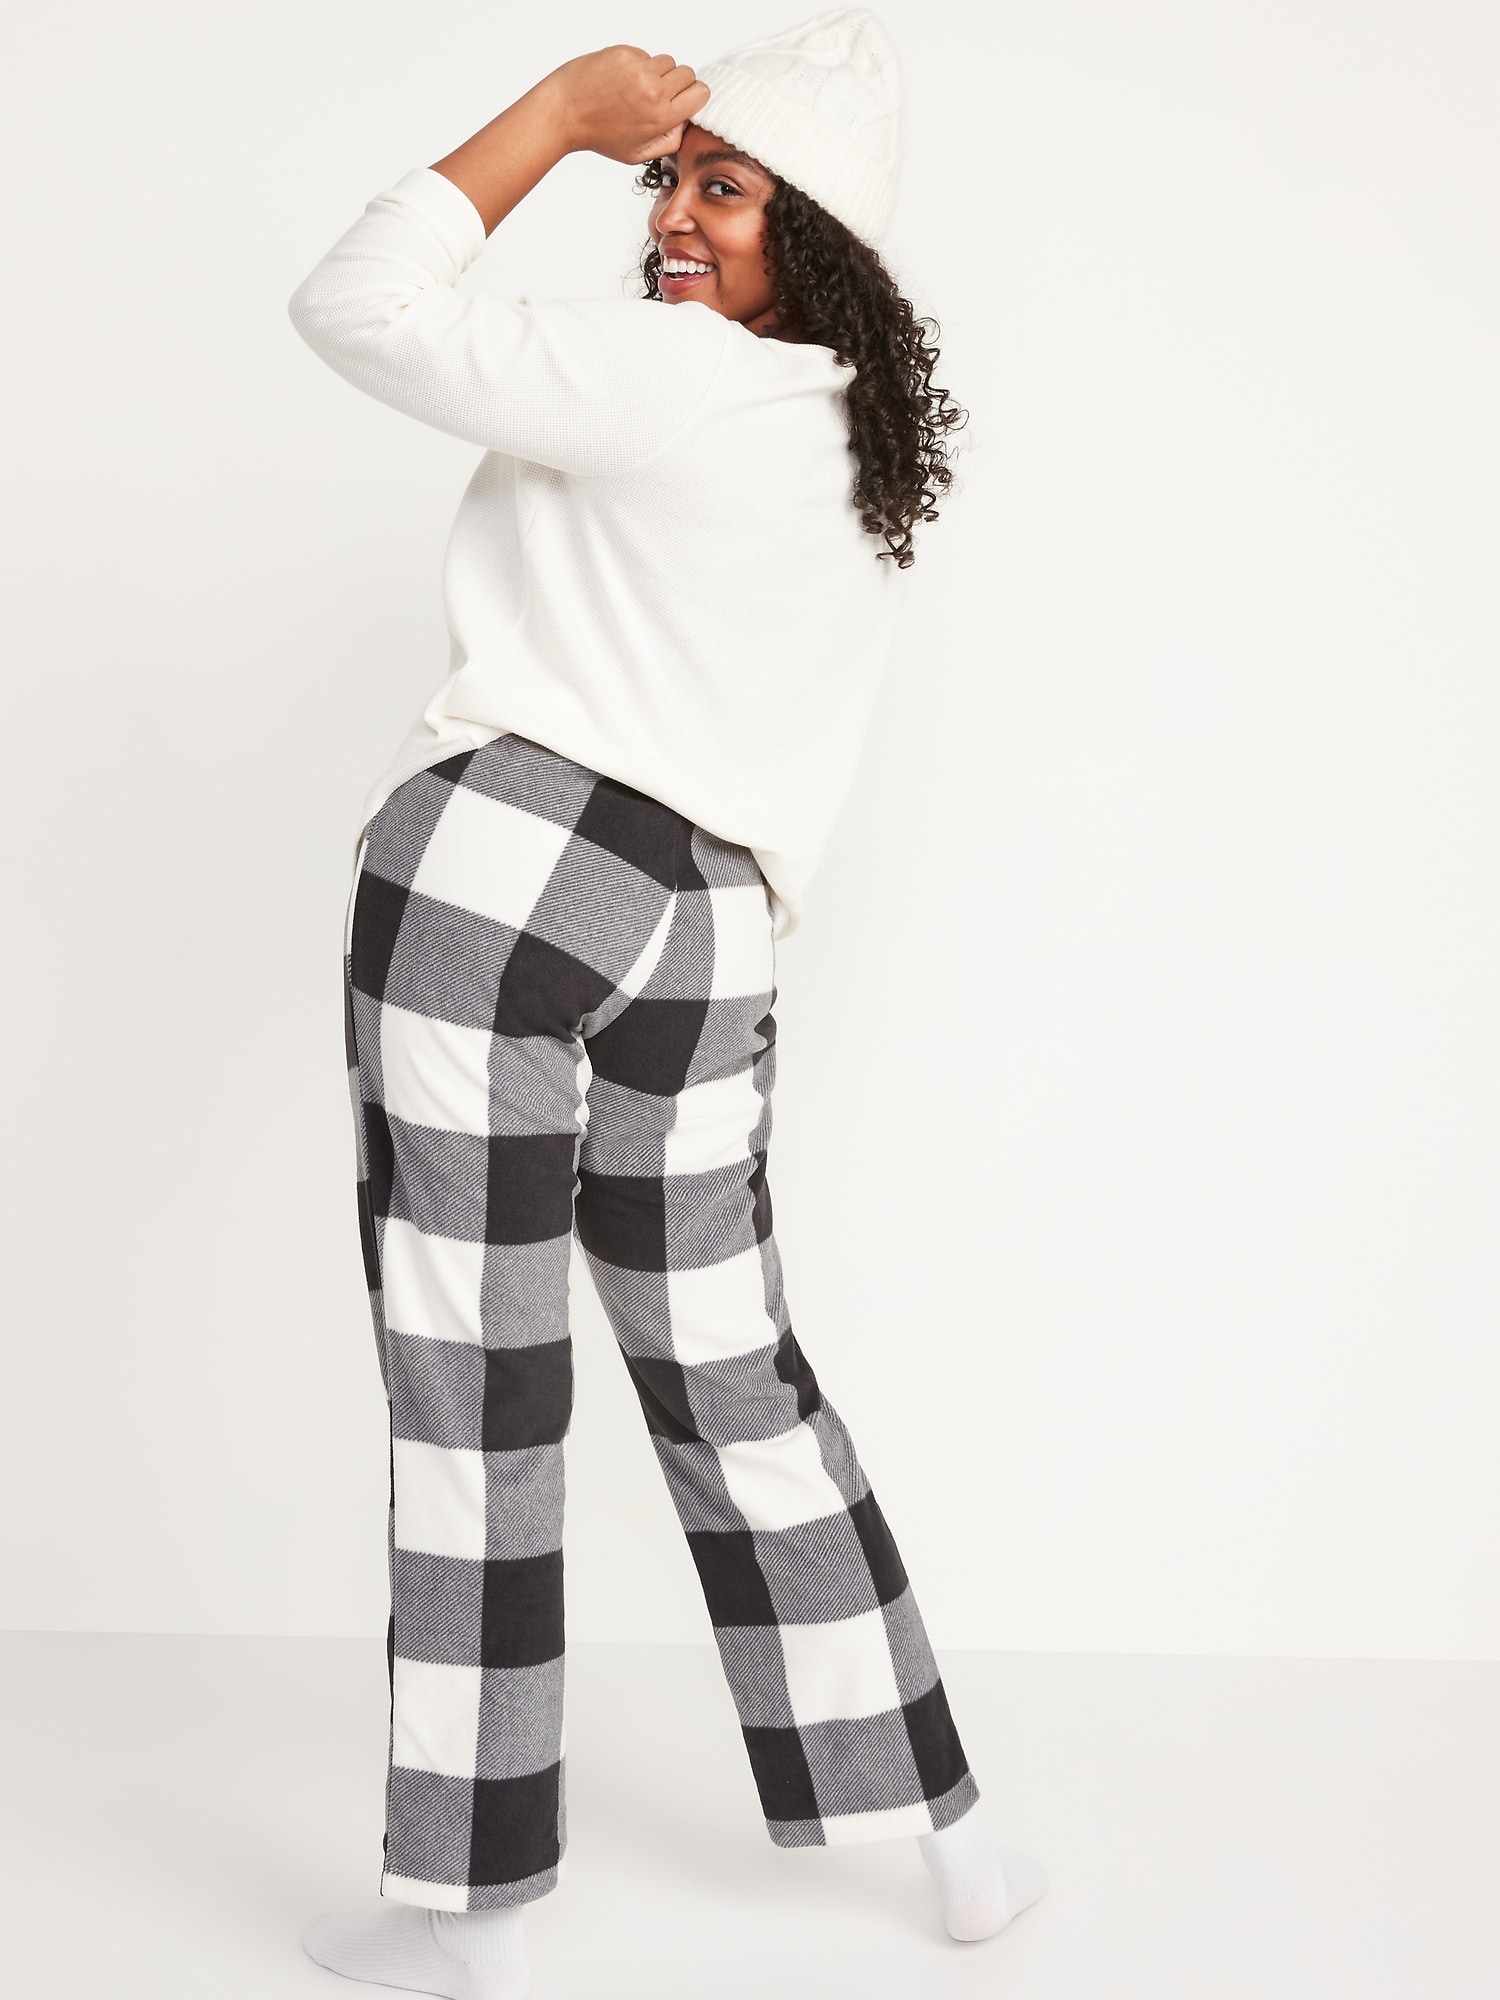 Old Navy Matching Printed Microfleece Pajama Pants for Women